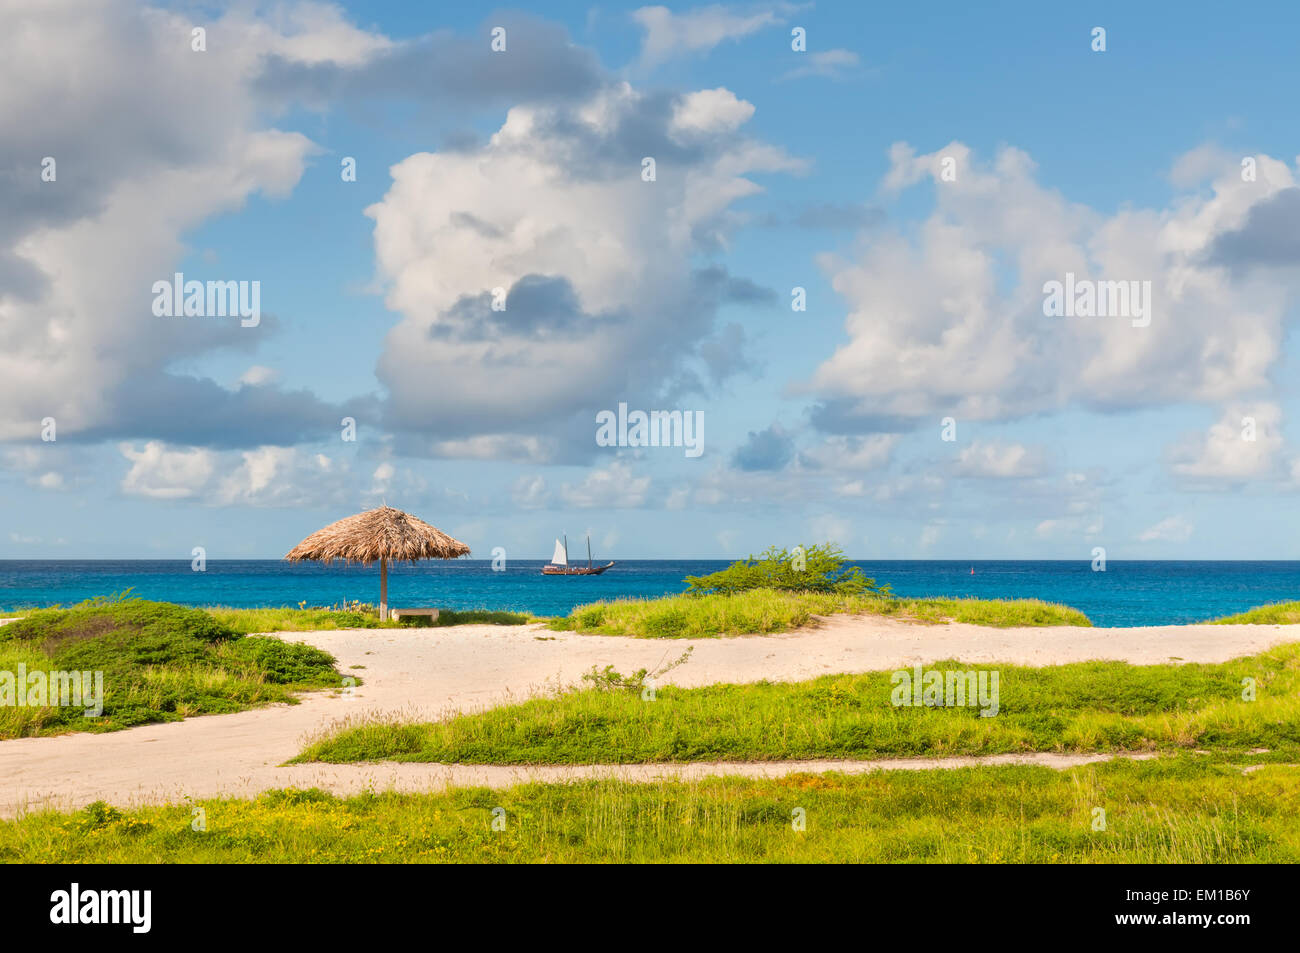 Palapa in deserted beach and turquoise blue caribbean sea - Aruba Stock Photo